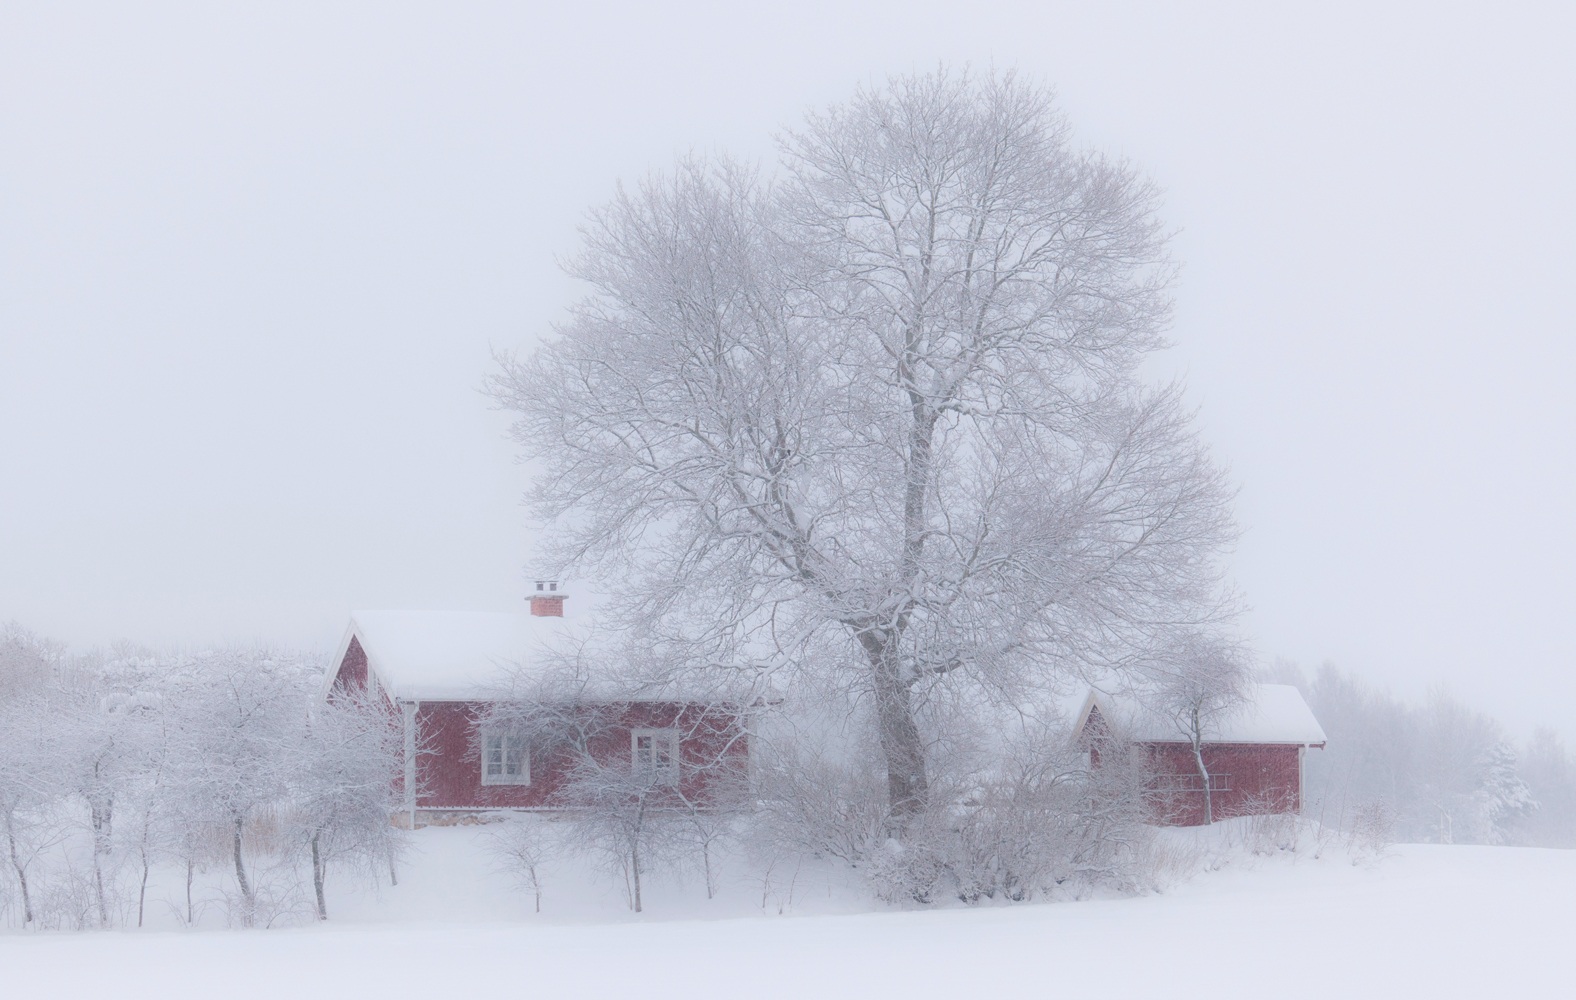 Se Winter idyll hos Picment.dk